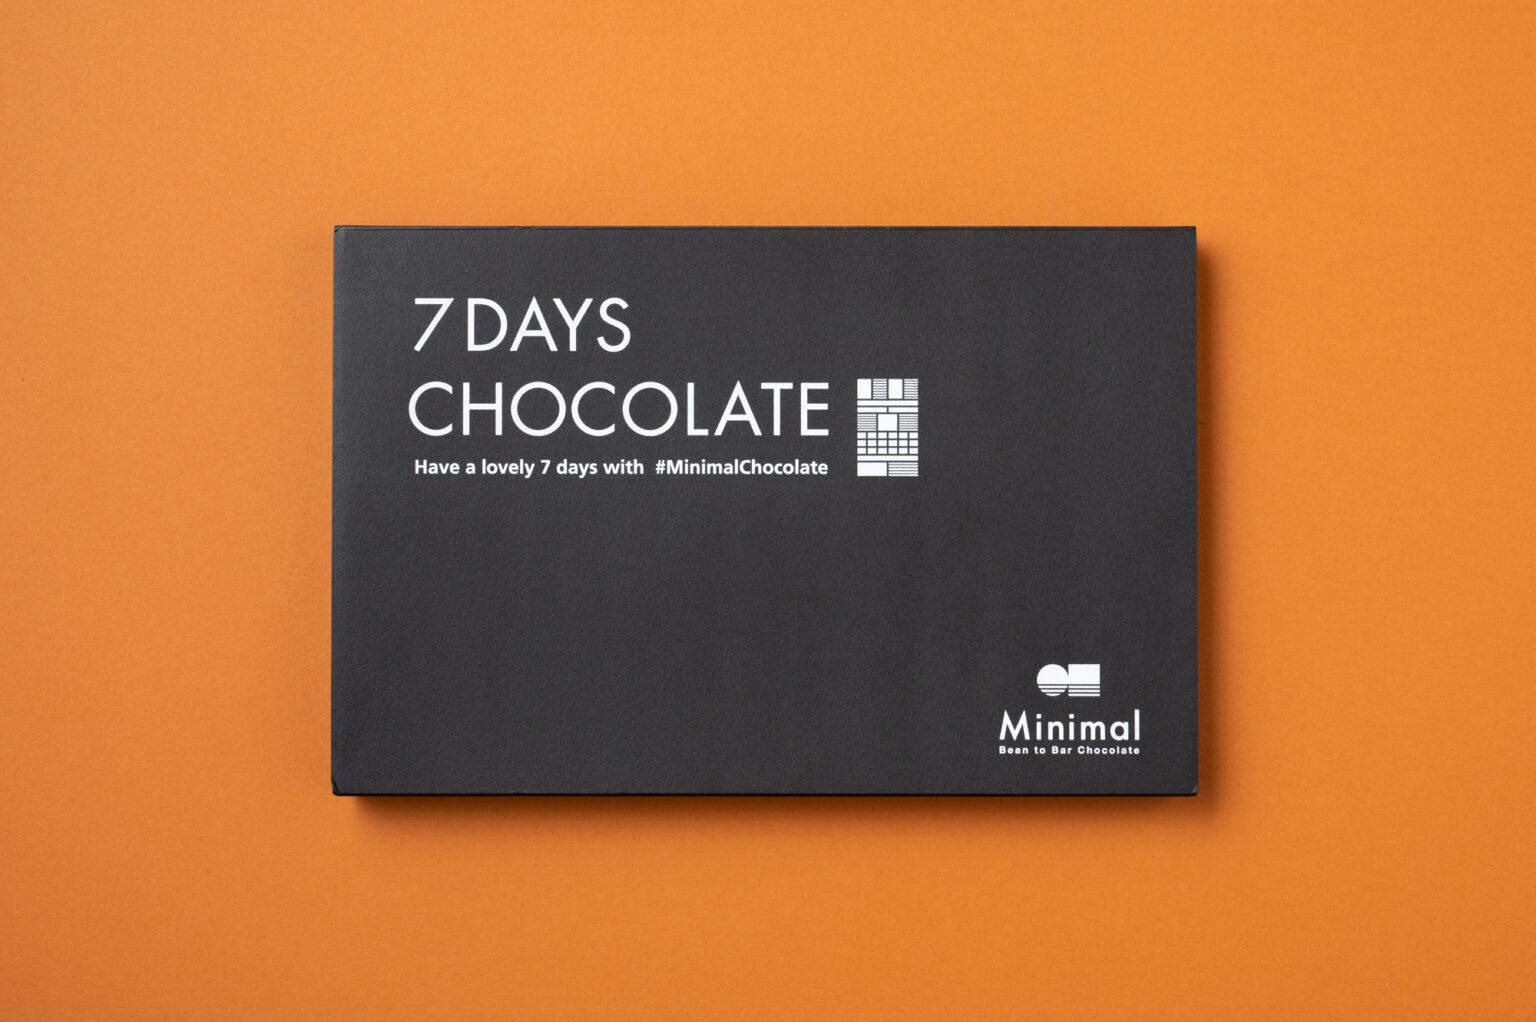 〈Minimal〉の7DAYS CHOCOLATE